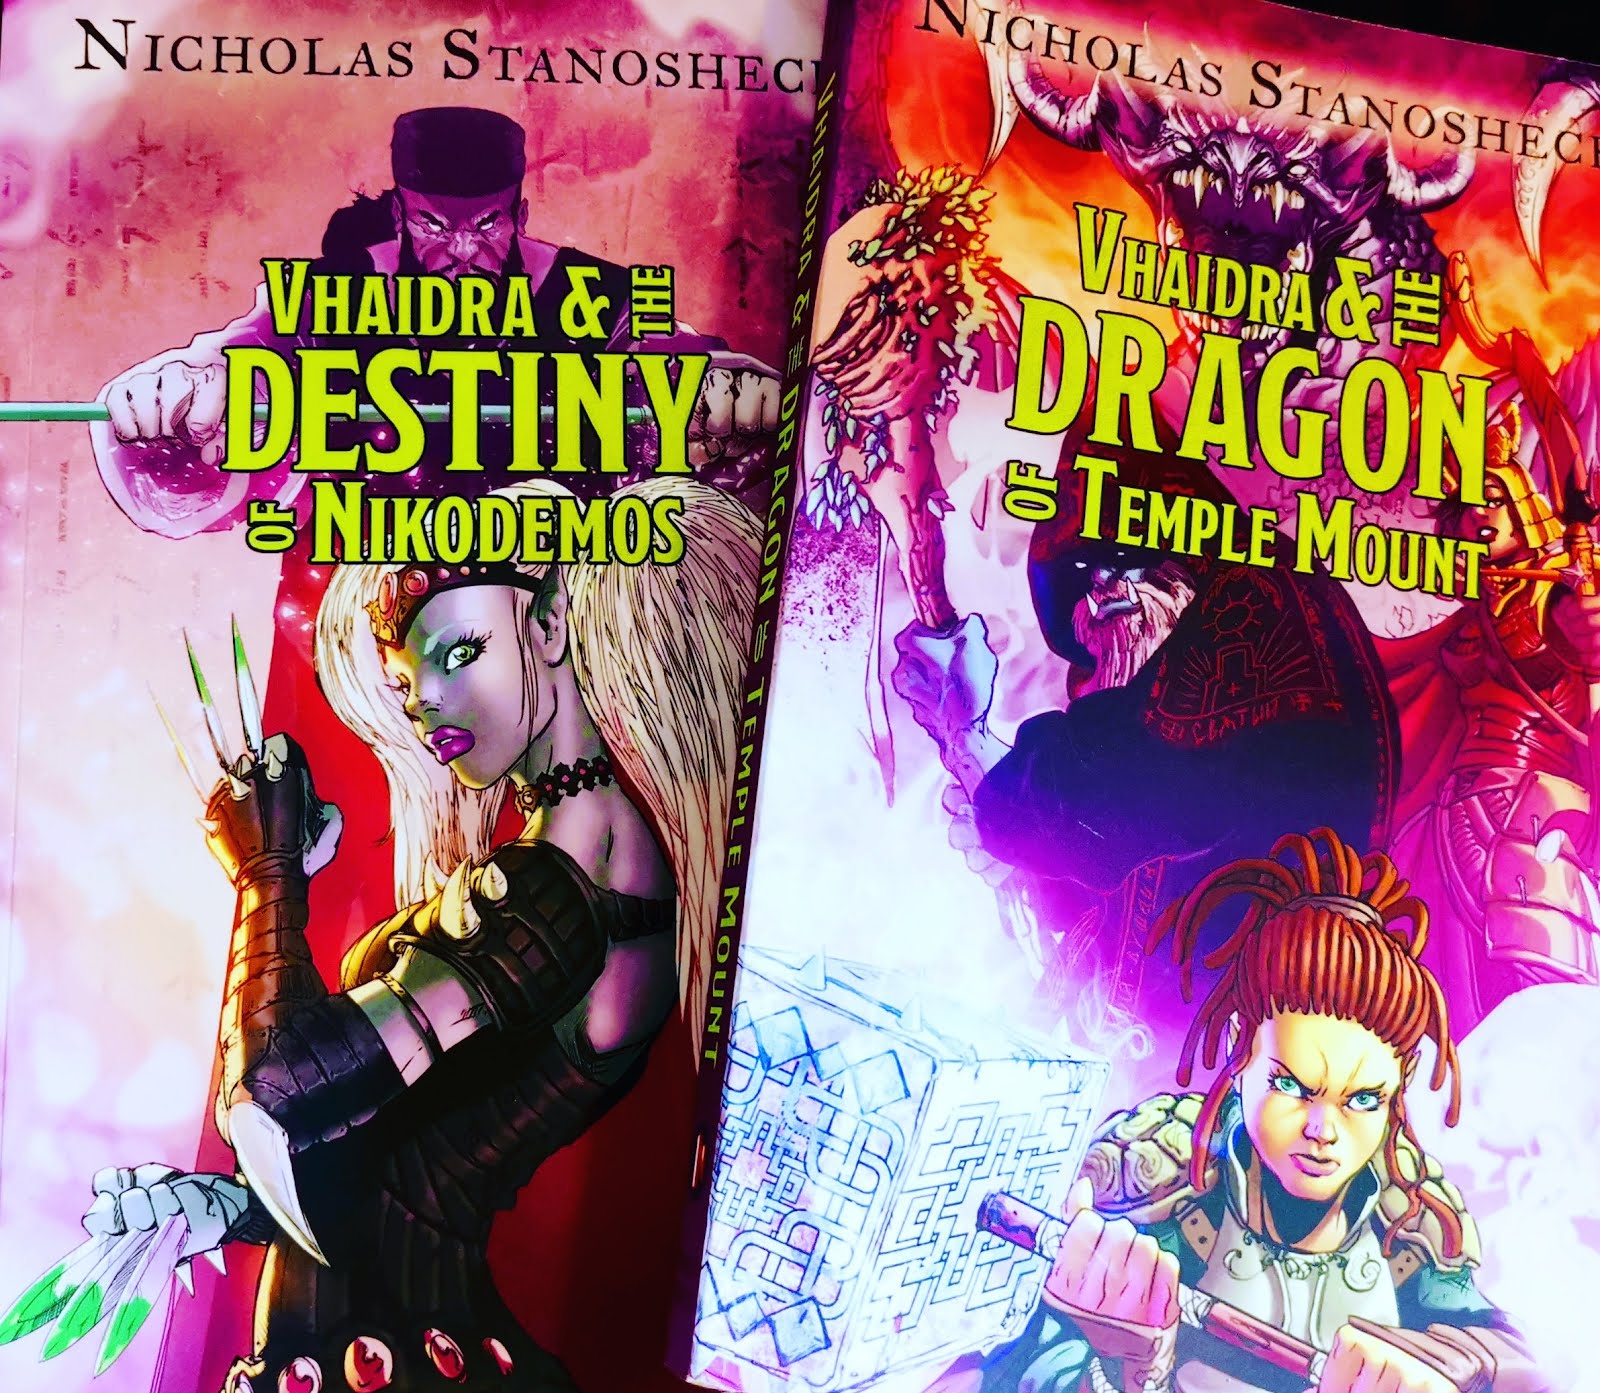 THE VHAIDRA SAGA:  A series of Epic Fantasy / Action & Adventure Novels by Nicholas Stanosheck